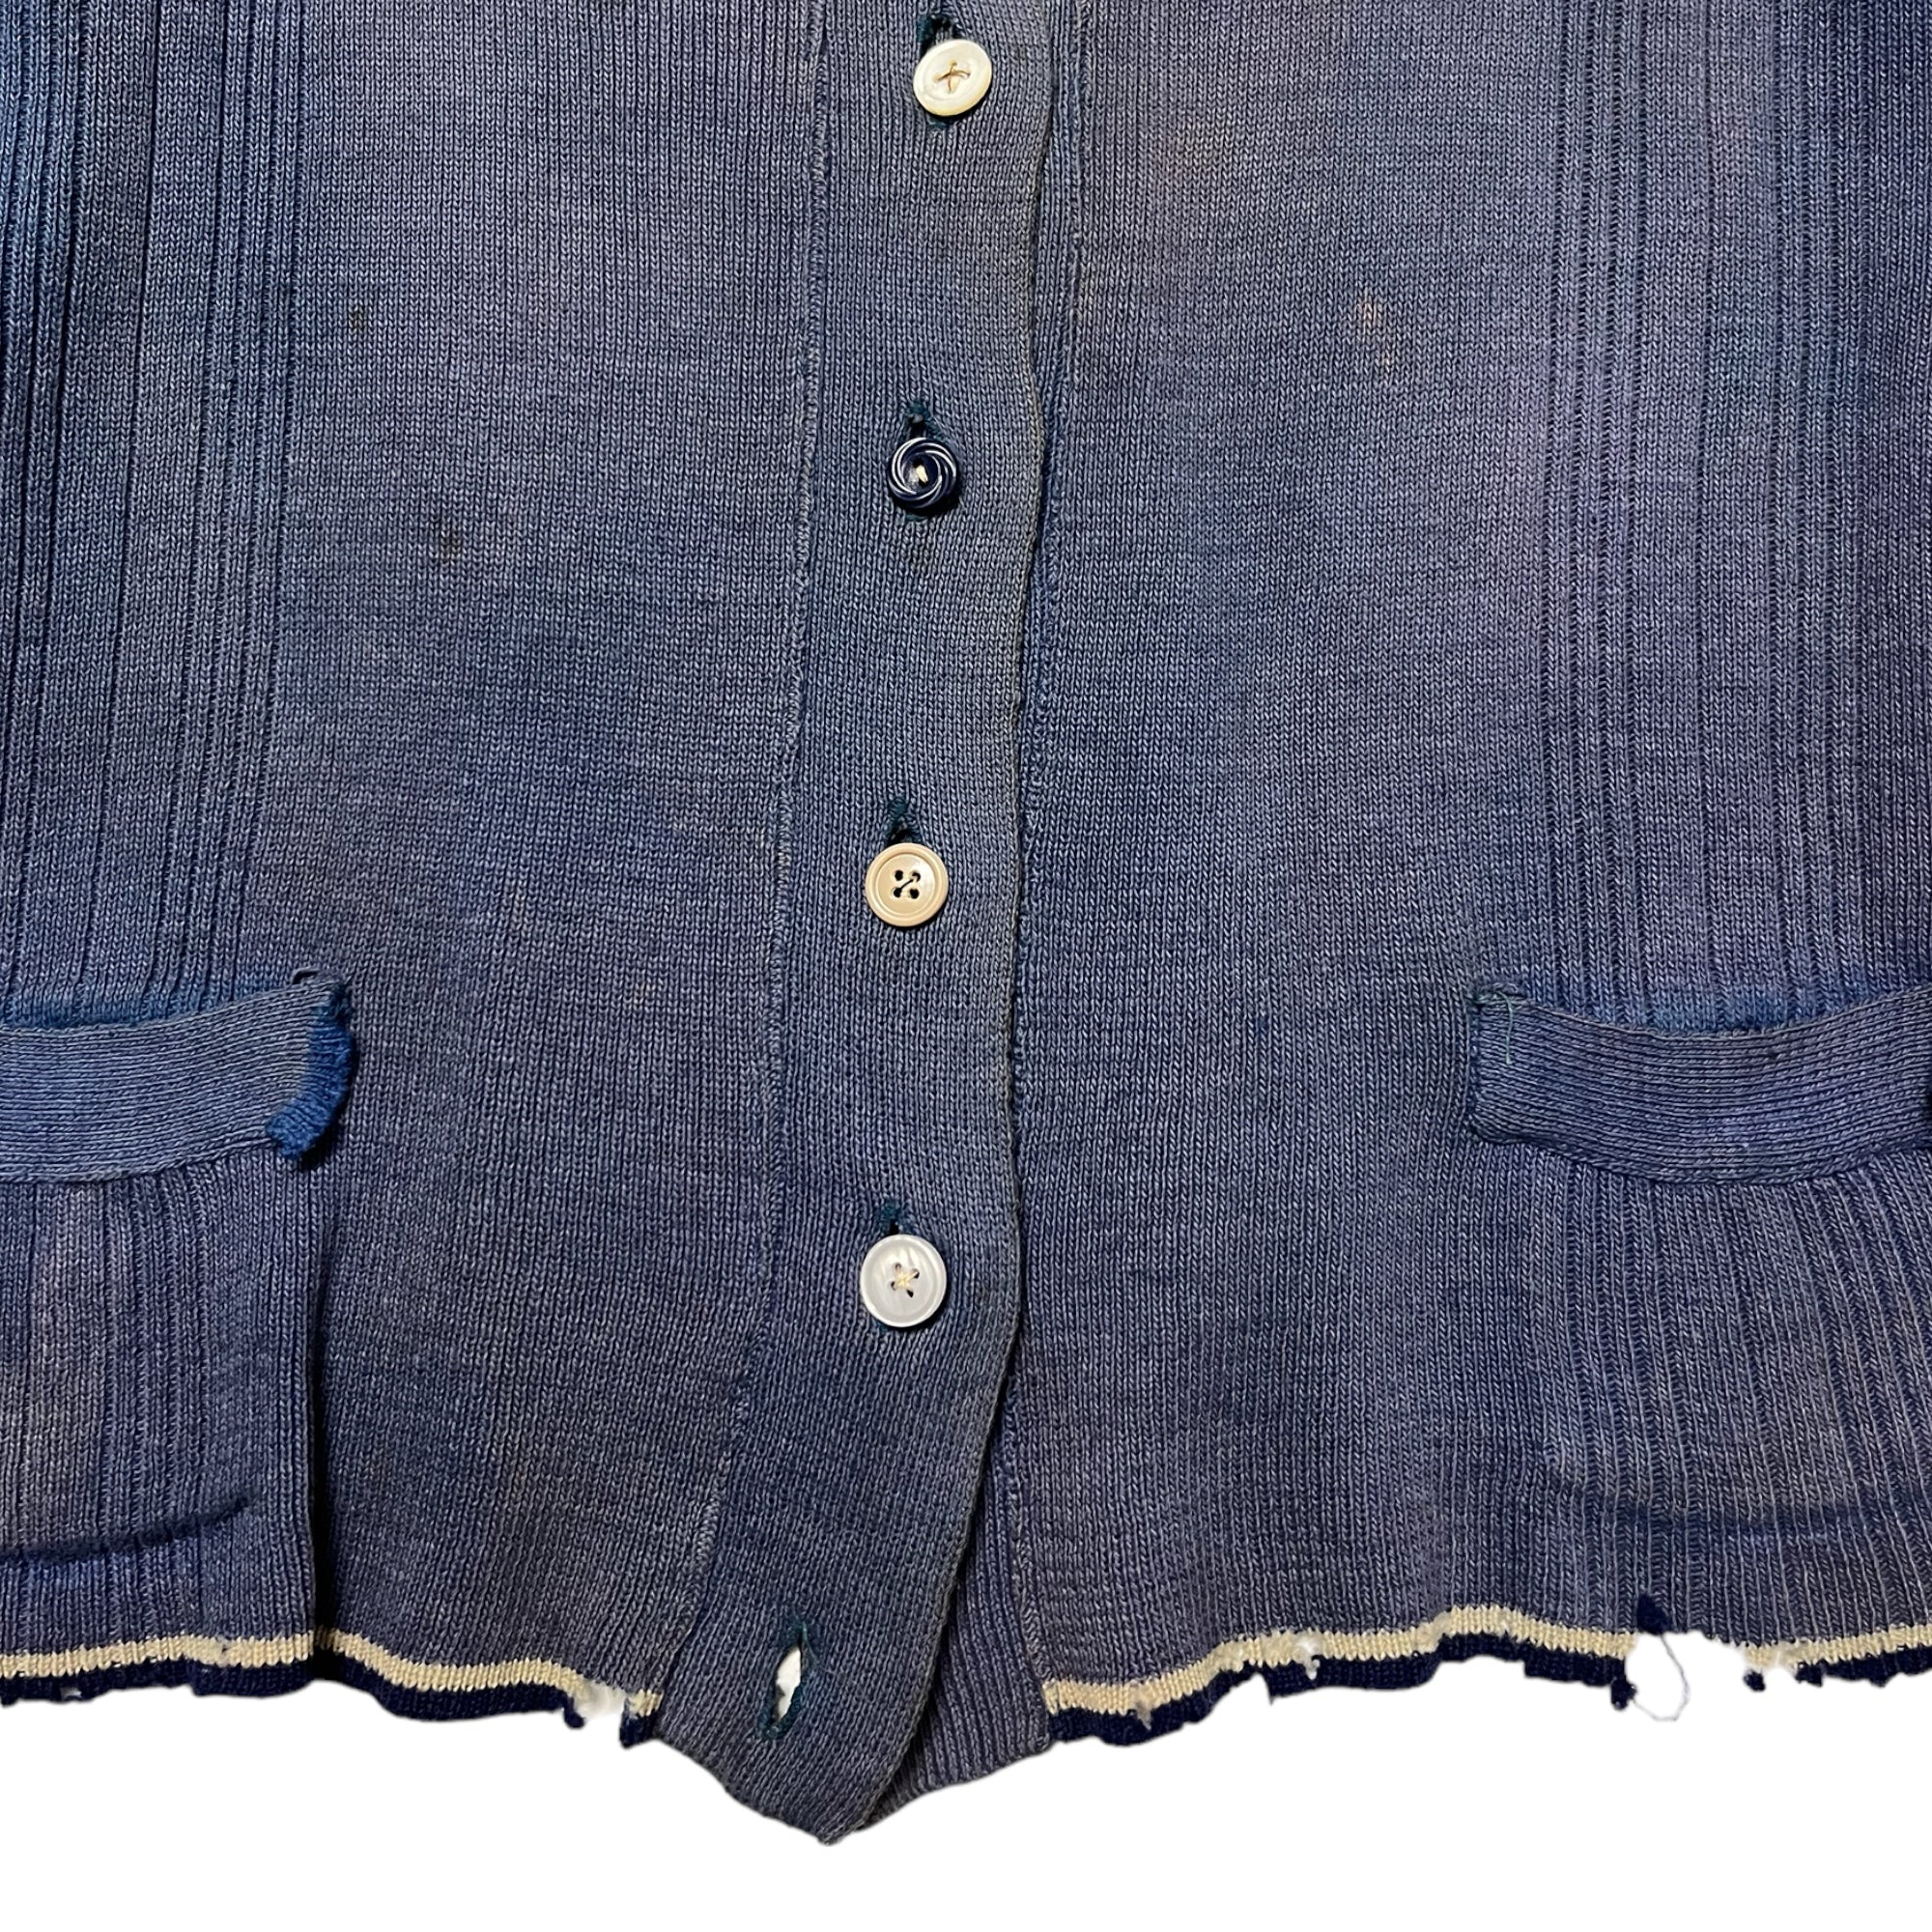 1940s Sun Faded German Knit Collared Cardigan Sweater - Blue/Brown - S/M